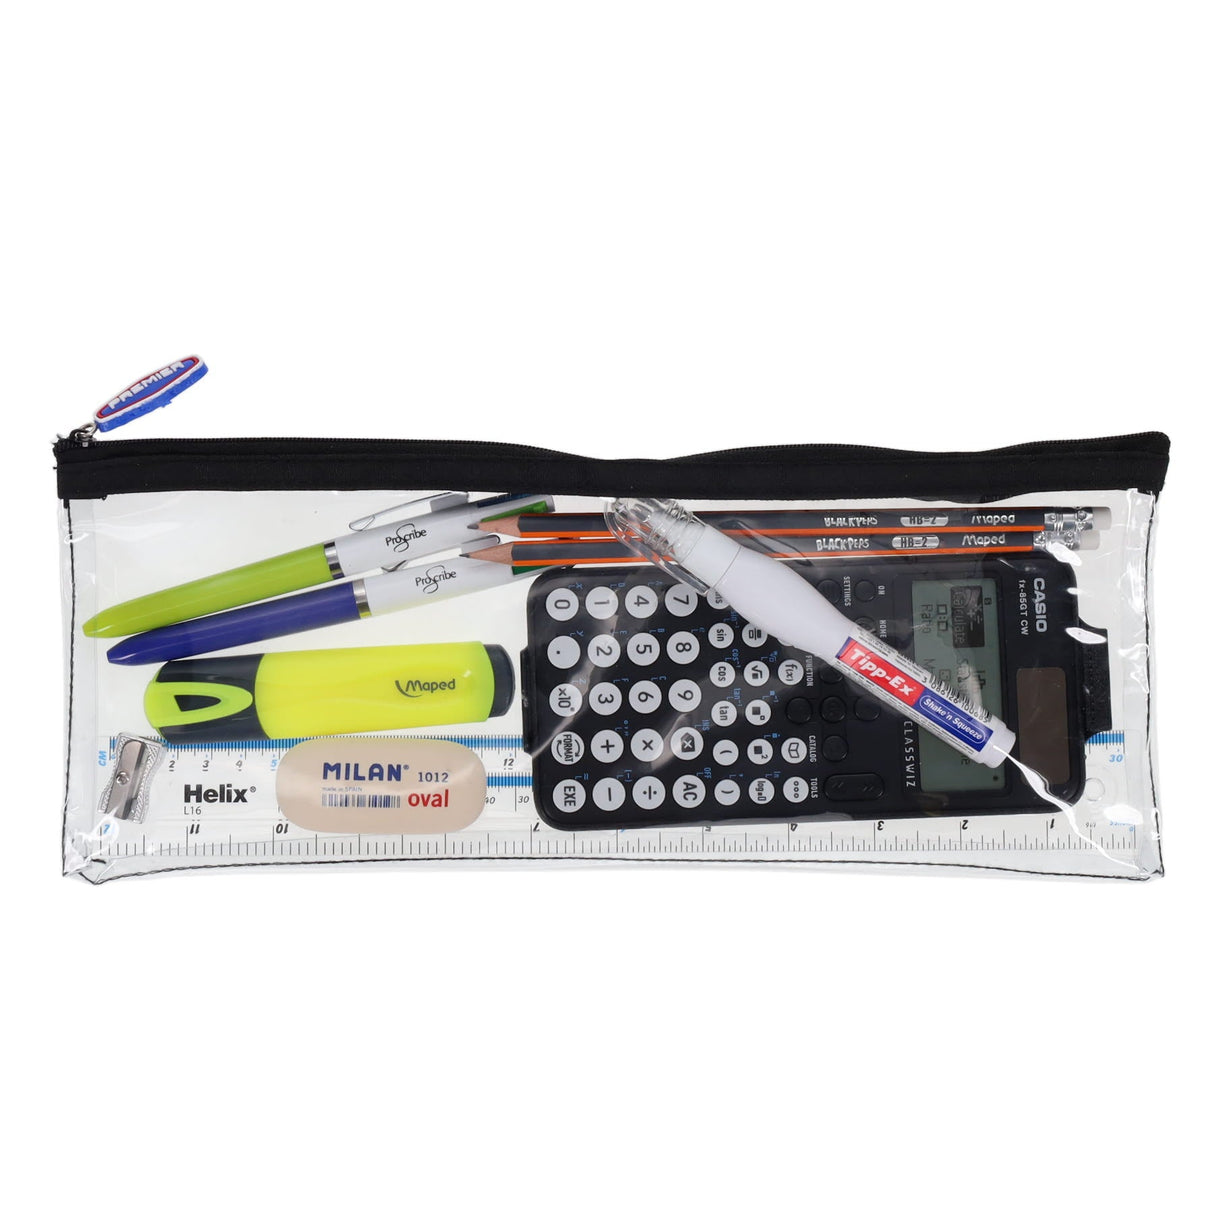 Stationery Multipack | Transparent Pencil Case 330x125mm - Option 2 | Stationery Shop UK